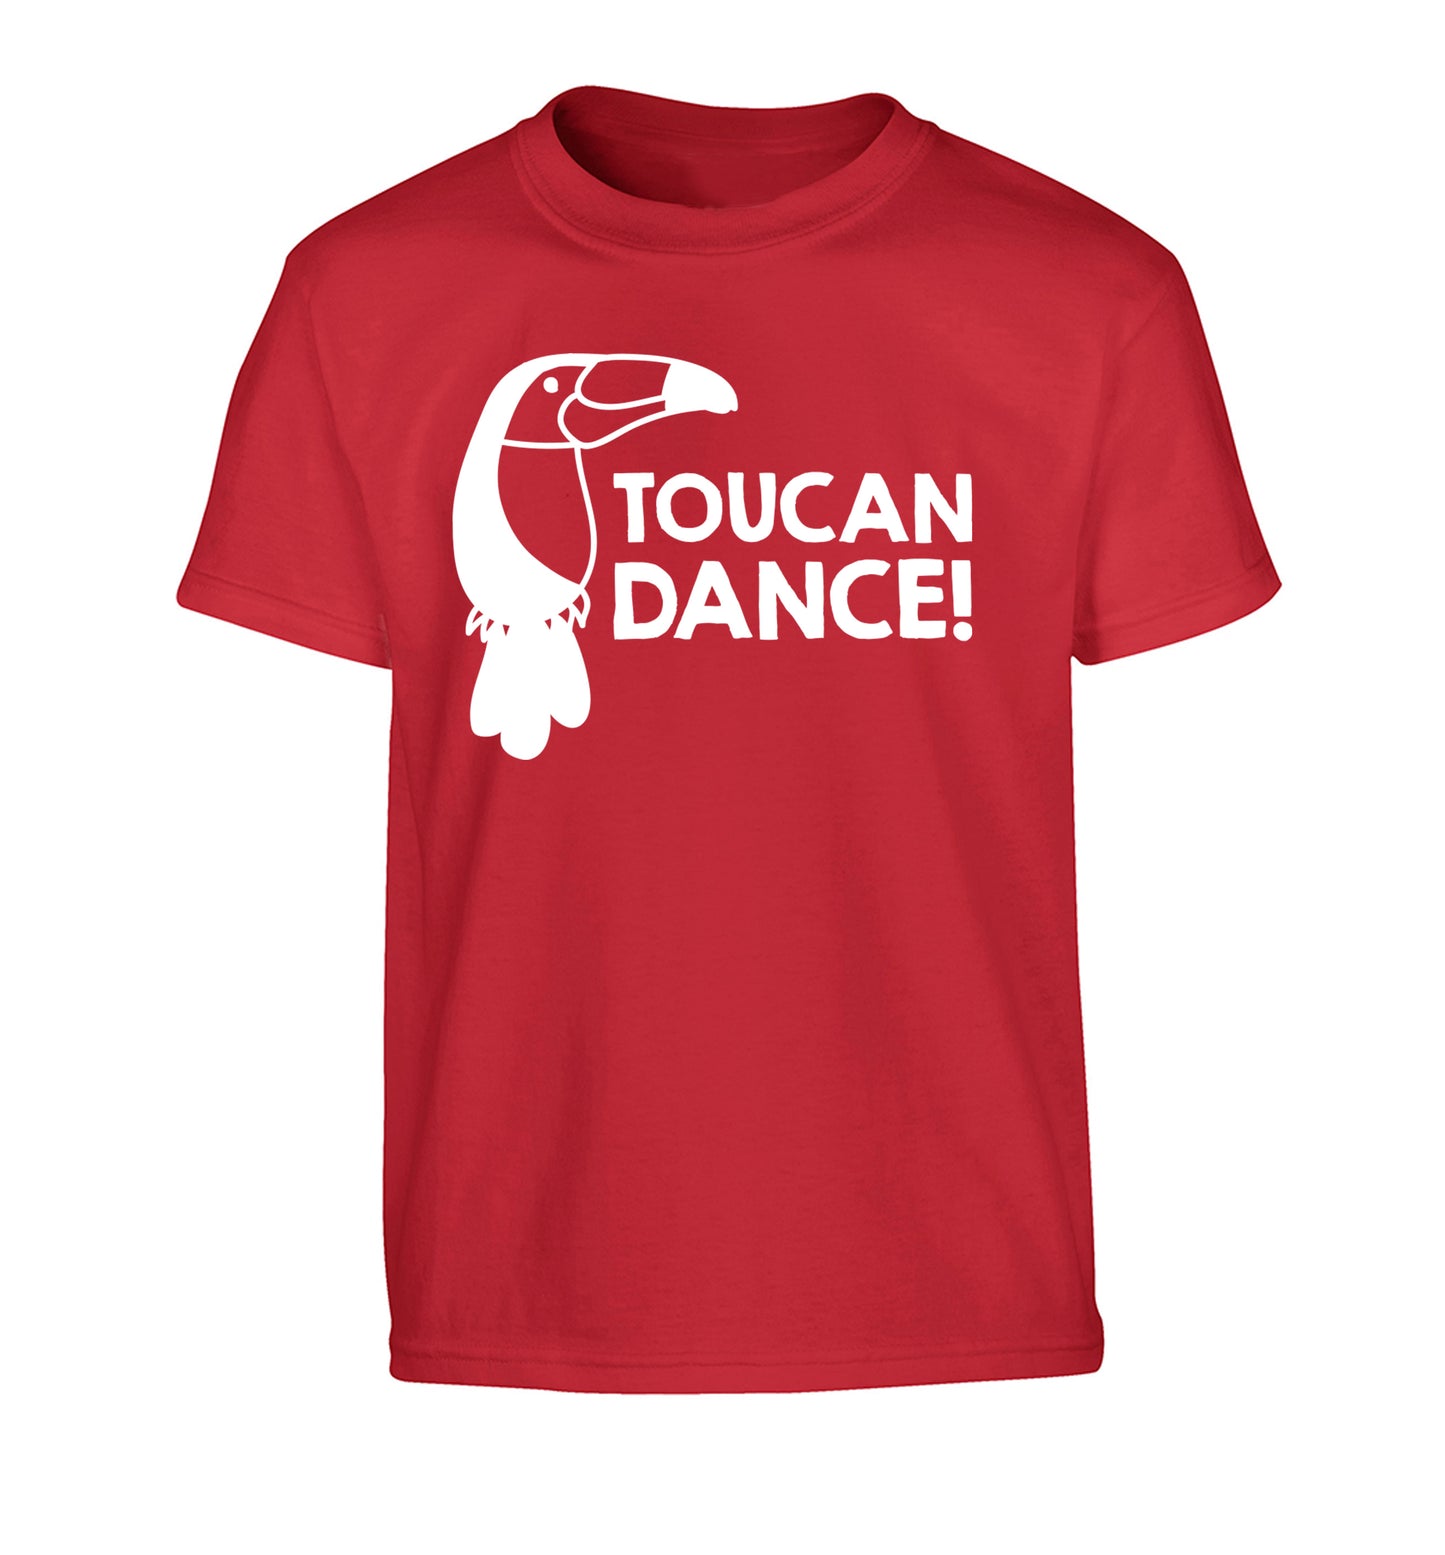 Toucan dance Children's red Tshirt 12-13 Years